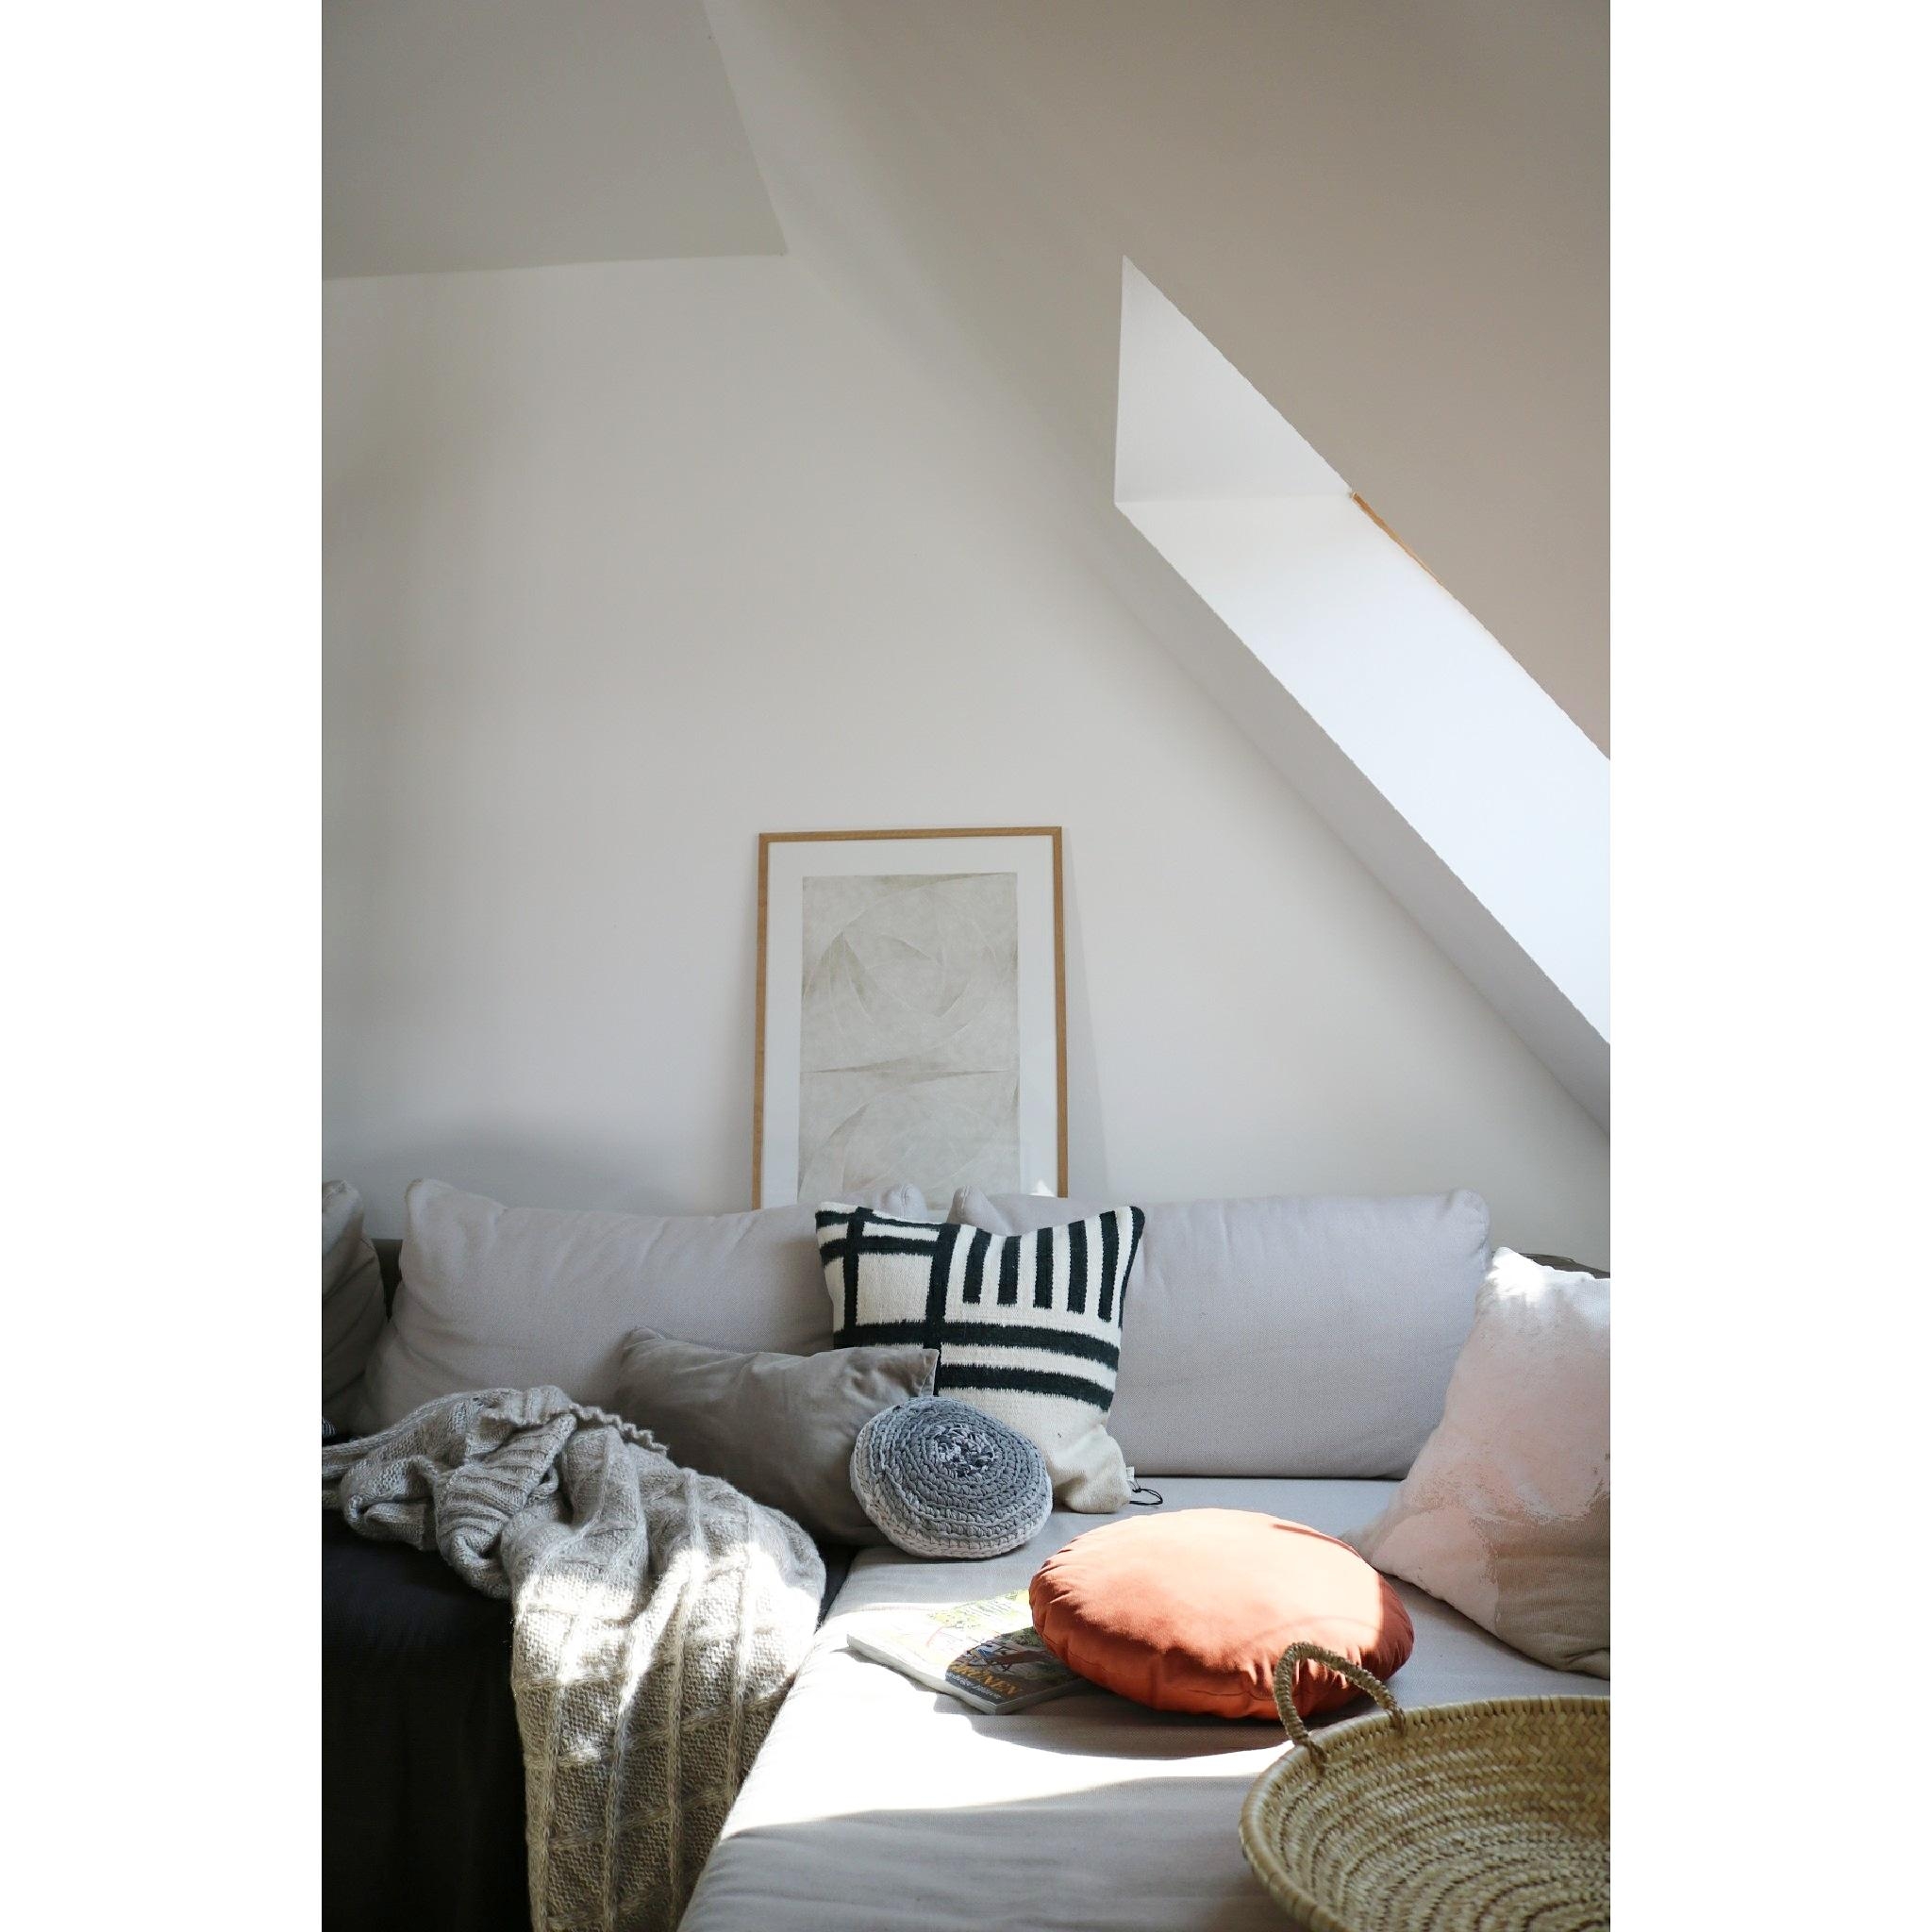 #livingroom #hygge #grey #nordic #scandinavian #scandihome #myhome #mynordicroom #interior #design #living